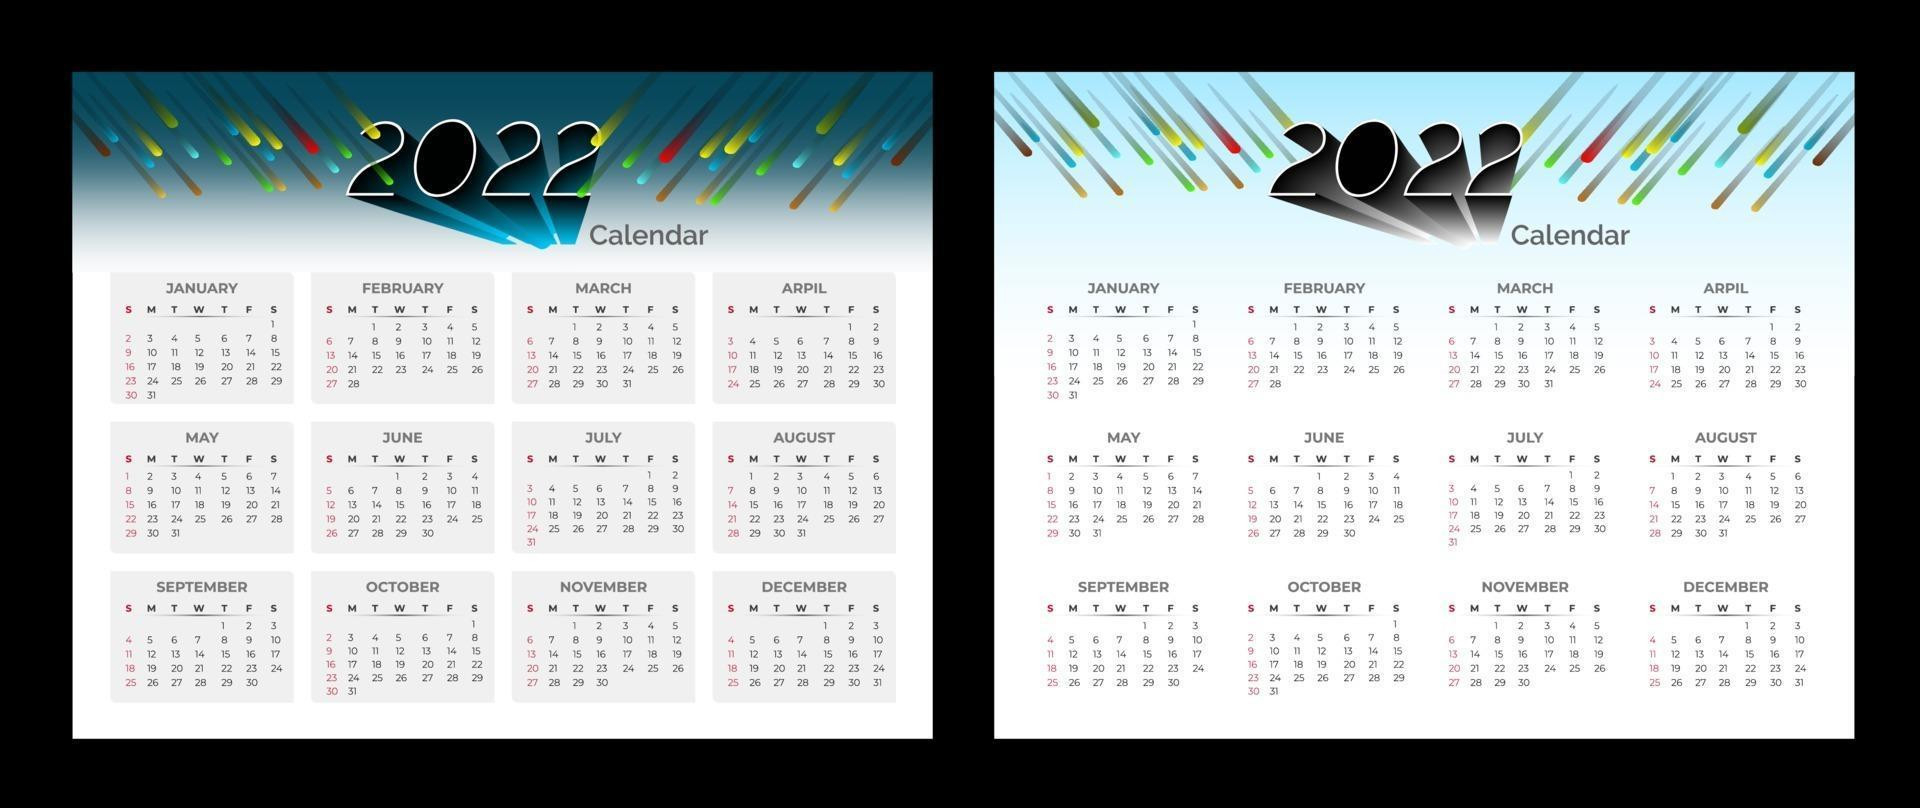 2022 Calendar Template Wall Calendar 2022 Vector Desk Calendar Design-2022 Calendar Vector Free Download